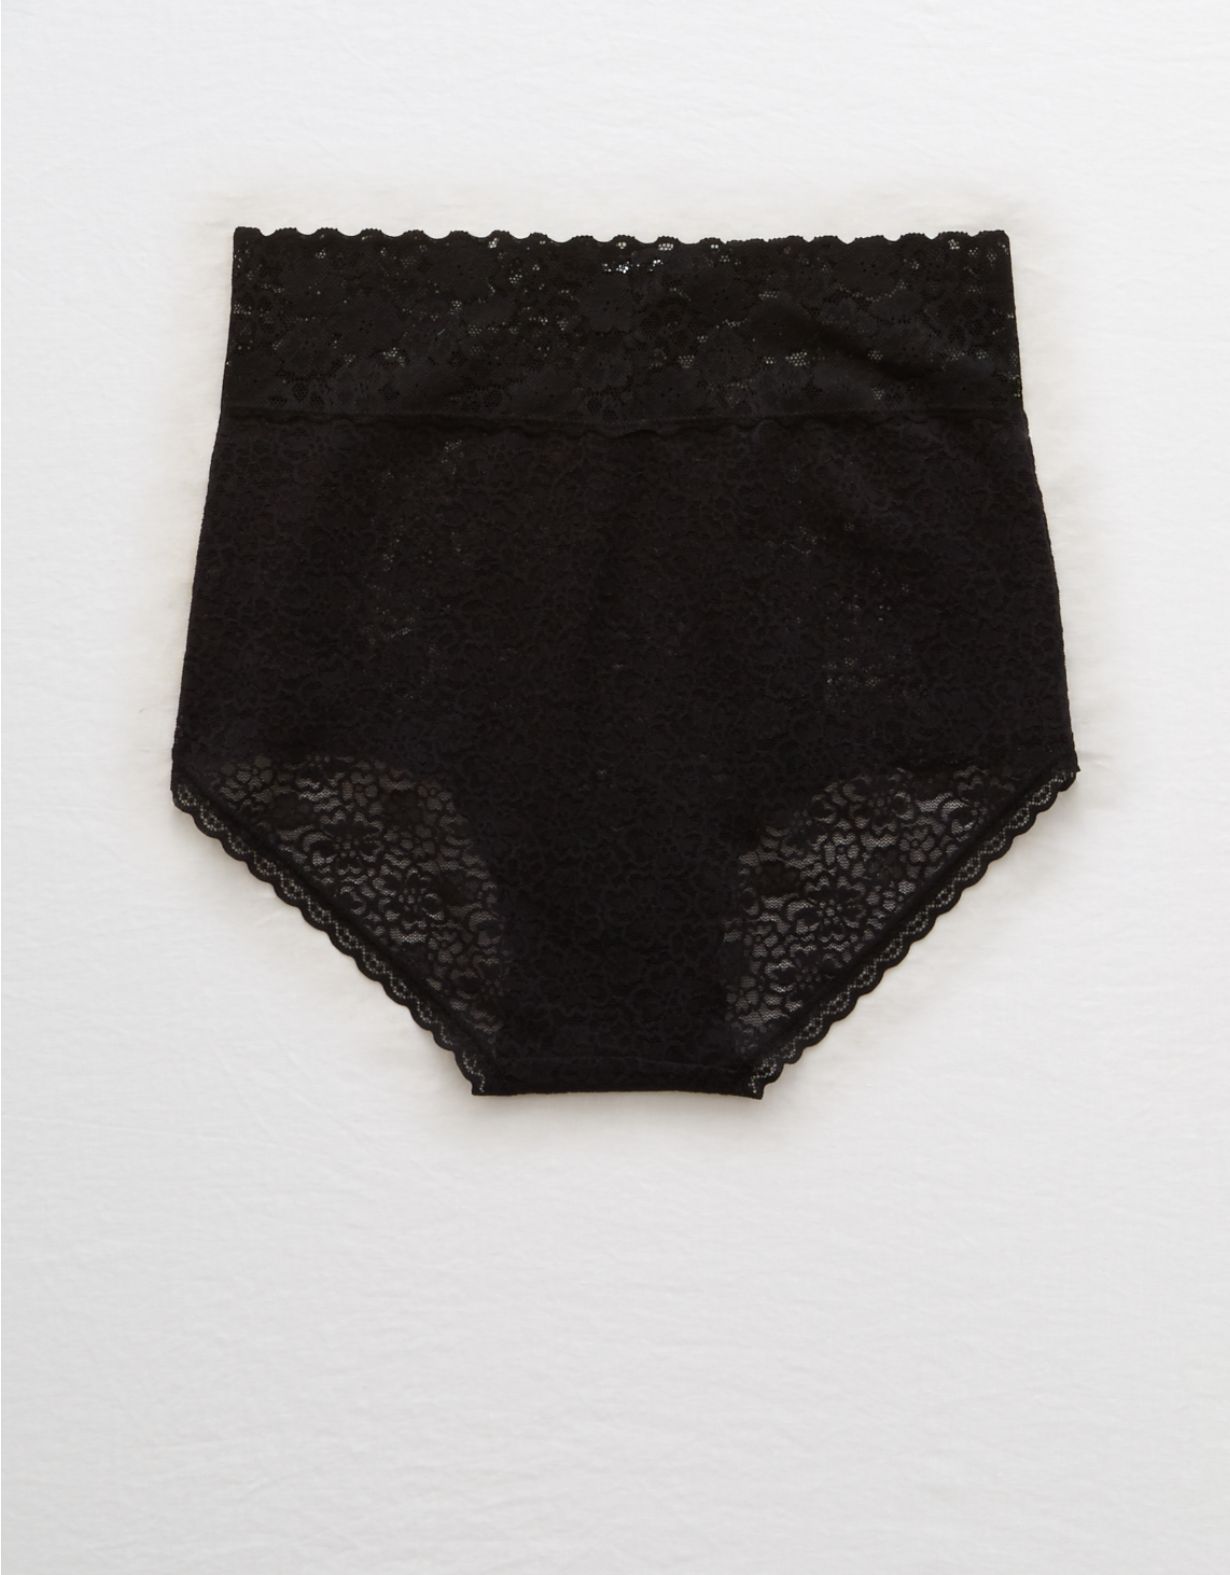 Aerie Lace High Waisted Boybrief Underwear